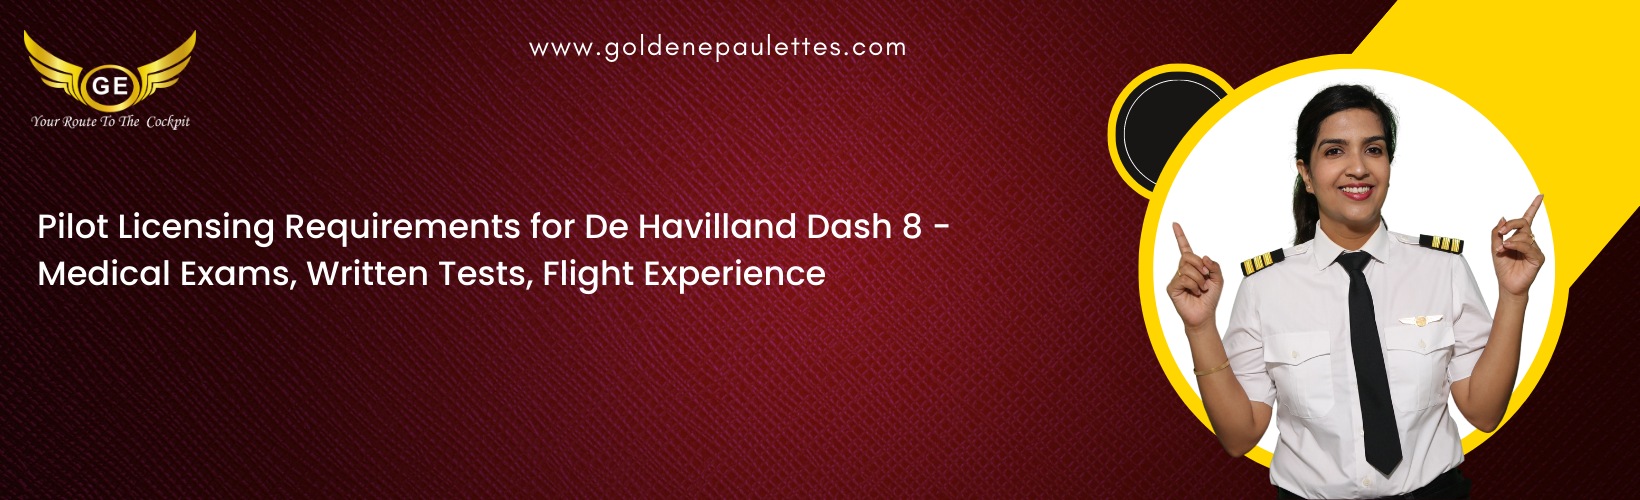 De Havilland Dash 8 Pilot Licensing Requirements